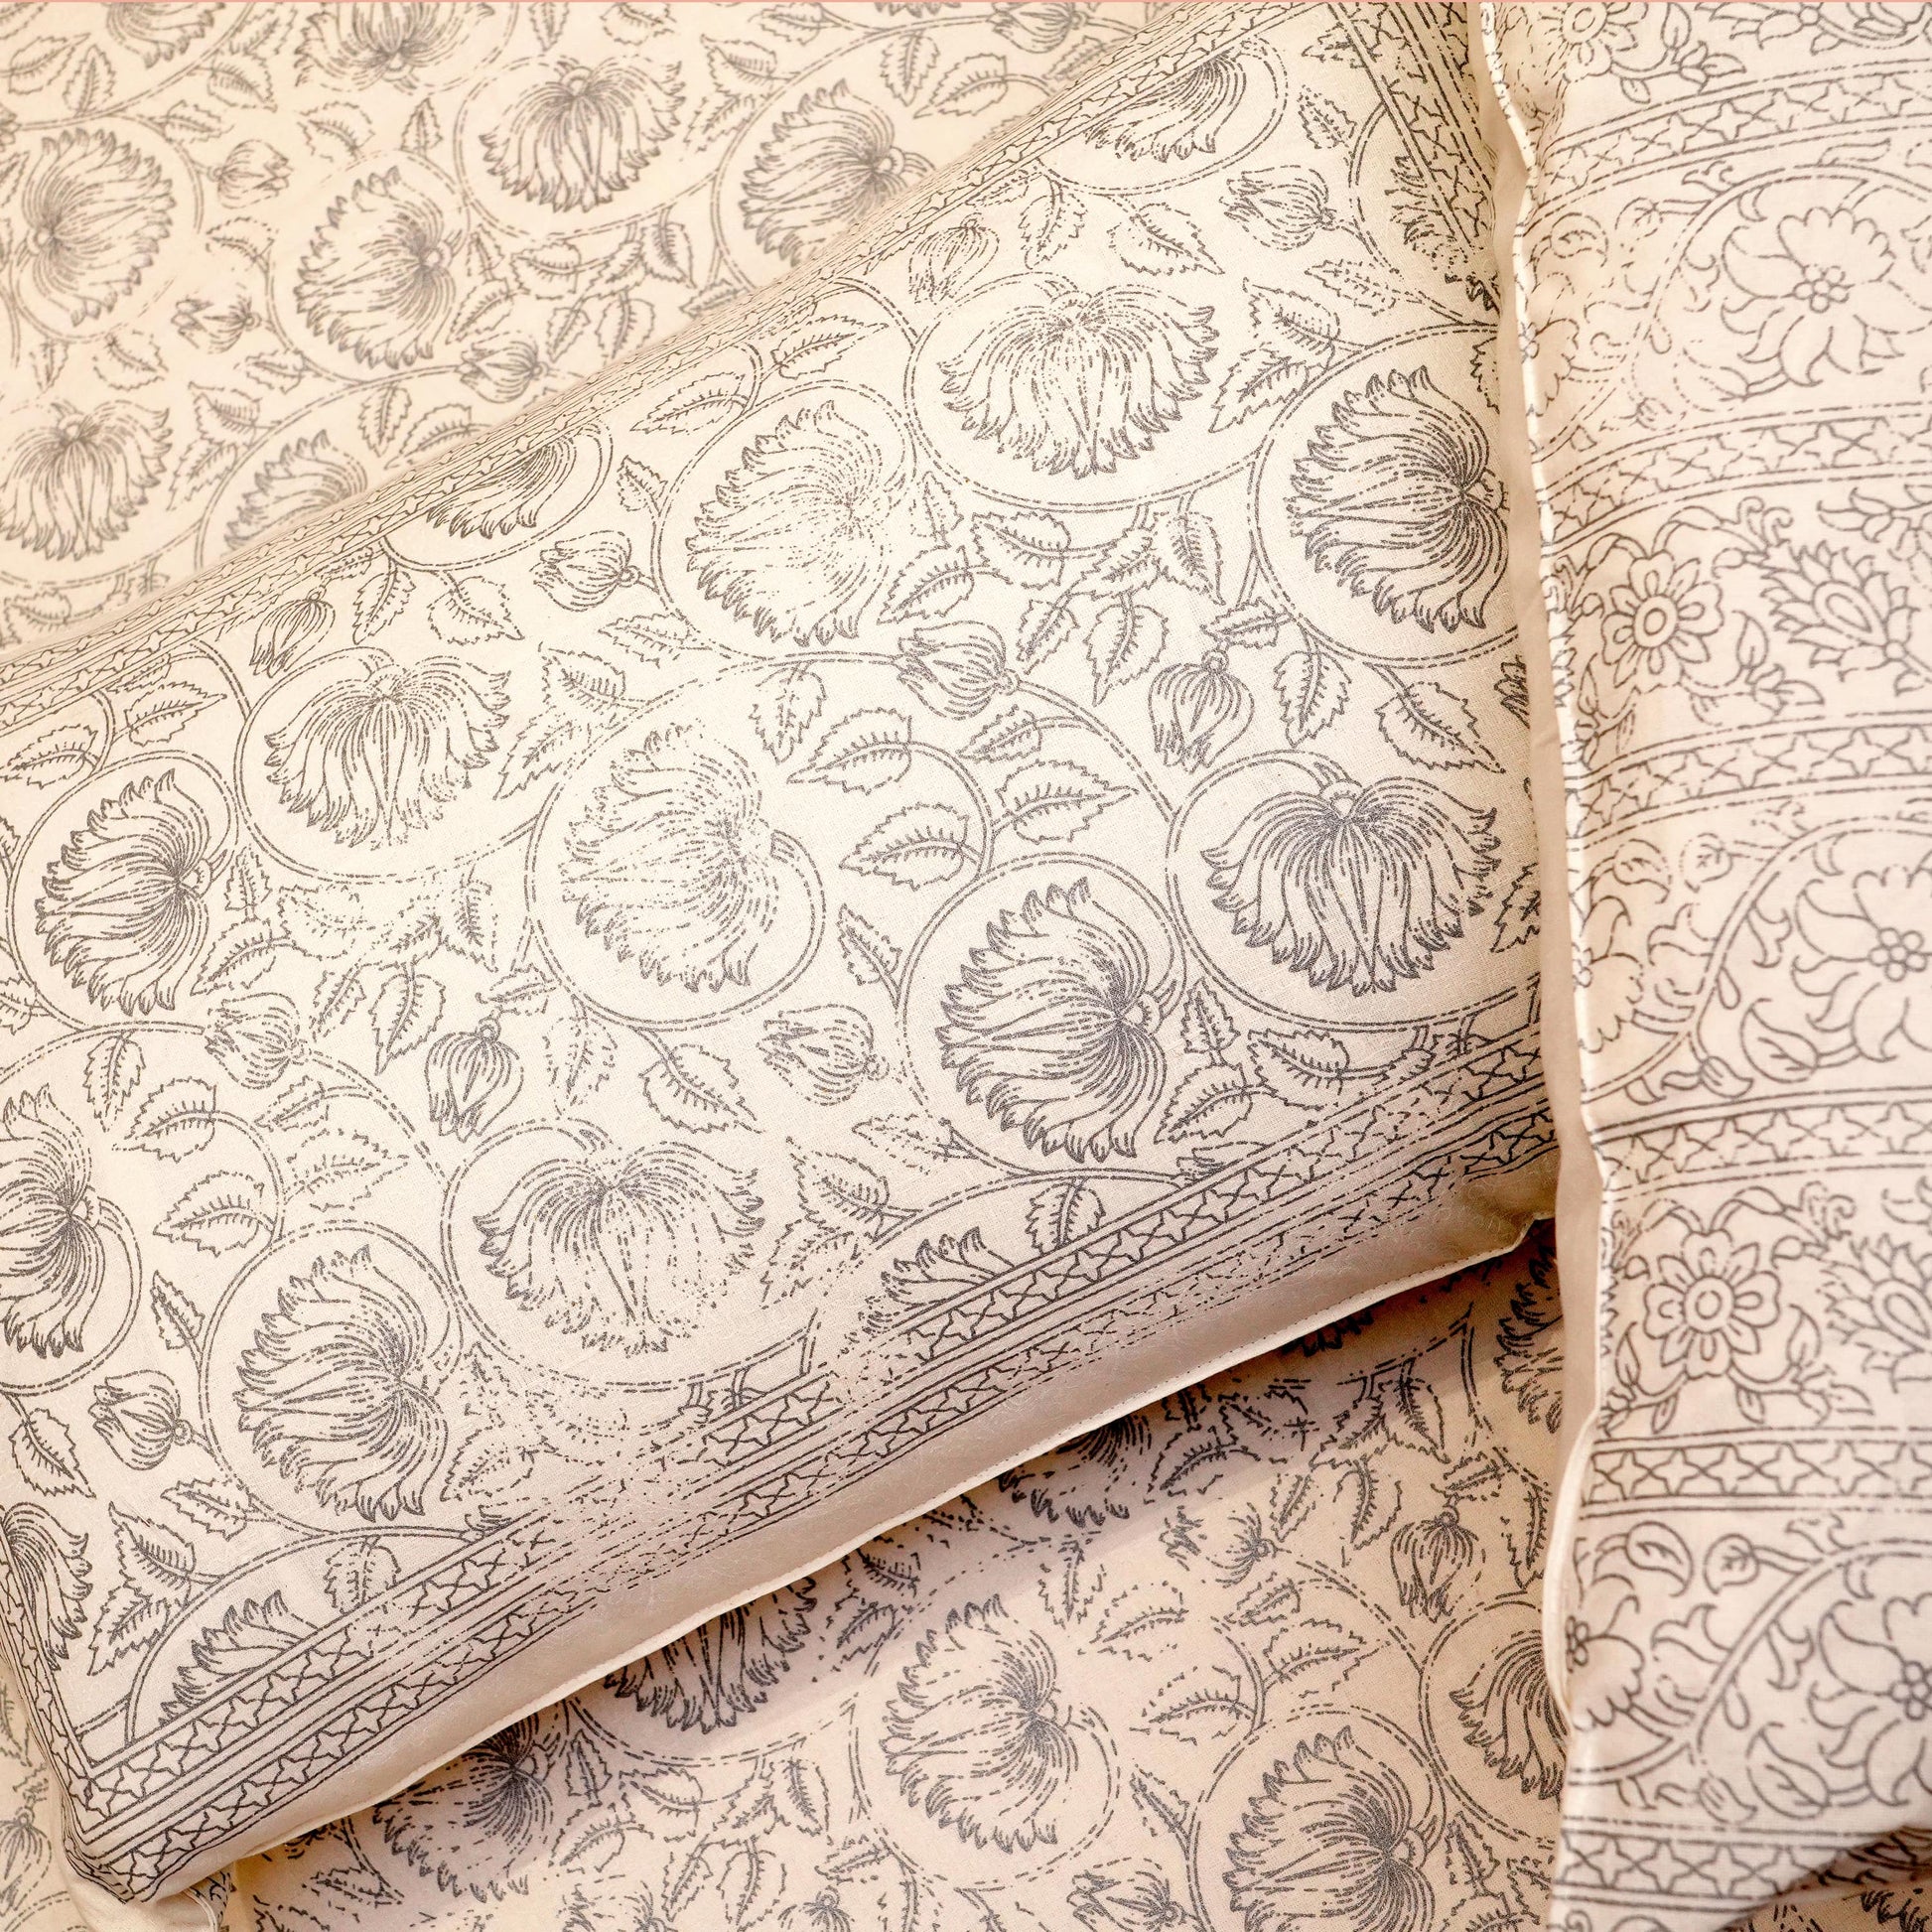 Pure Cotton Block Print Jaipuri Bedsheet - King Size 90*108 inches - Silver Flower